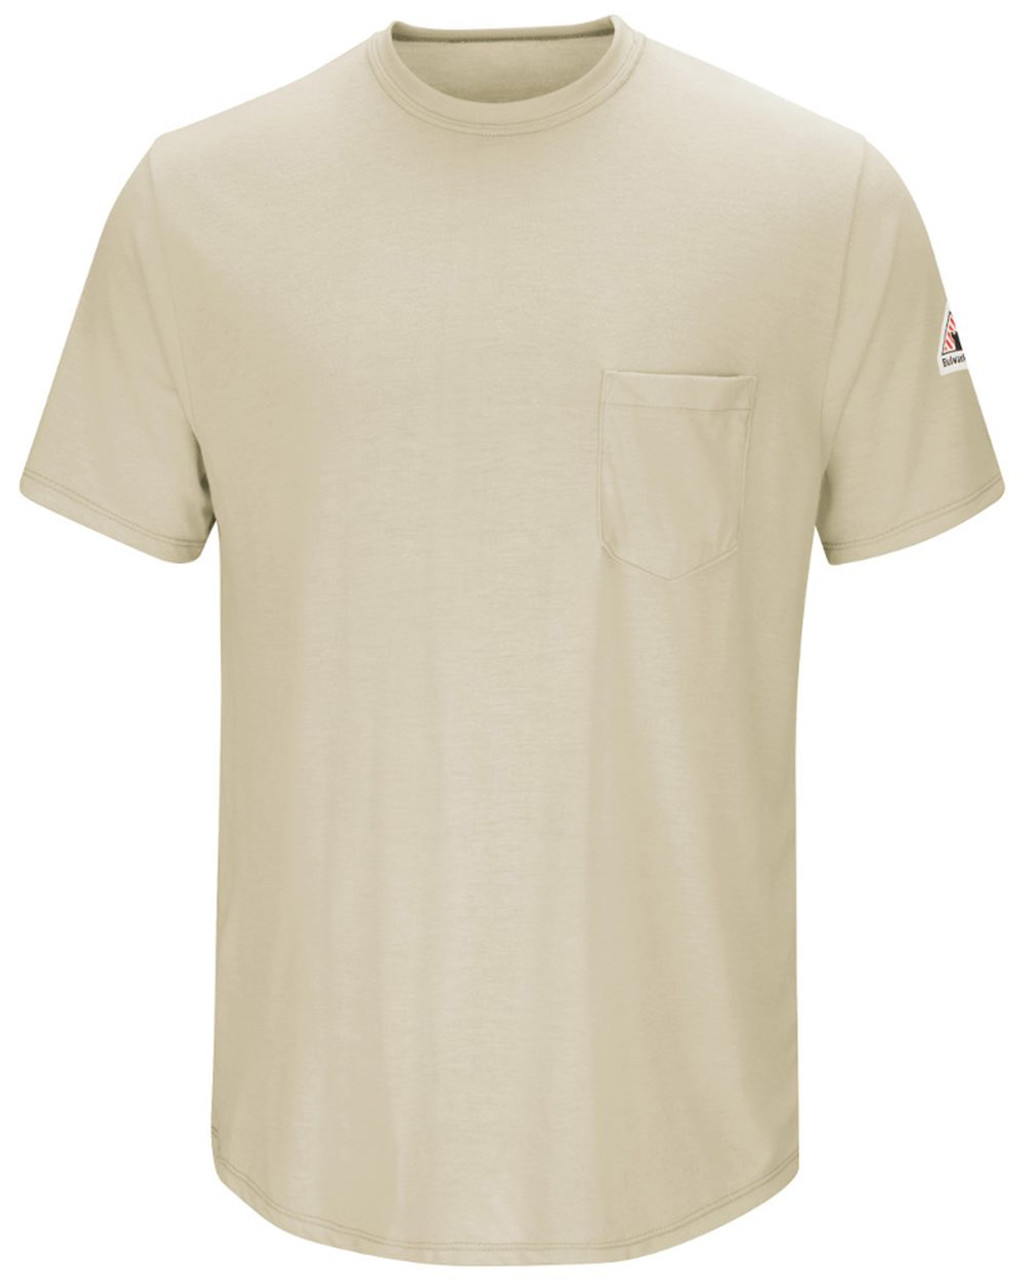 Custom Short Sleeve Lightweight T-Shirt - Long Sizes - SMT6L